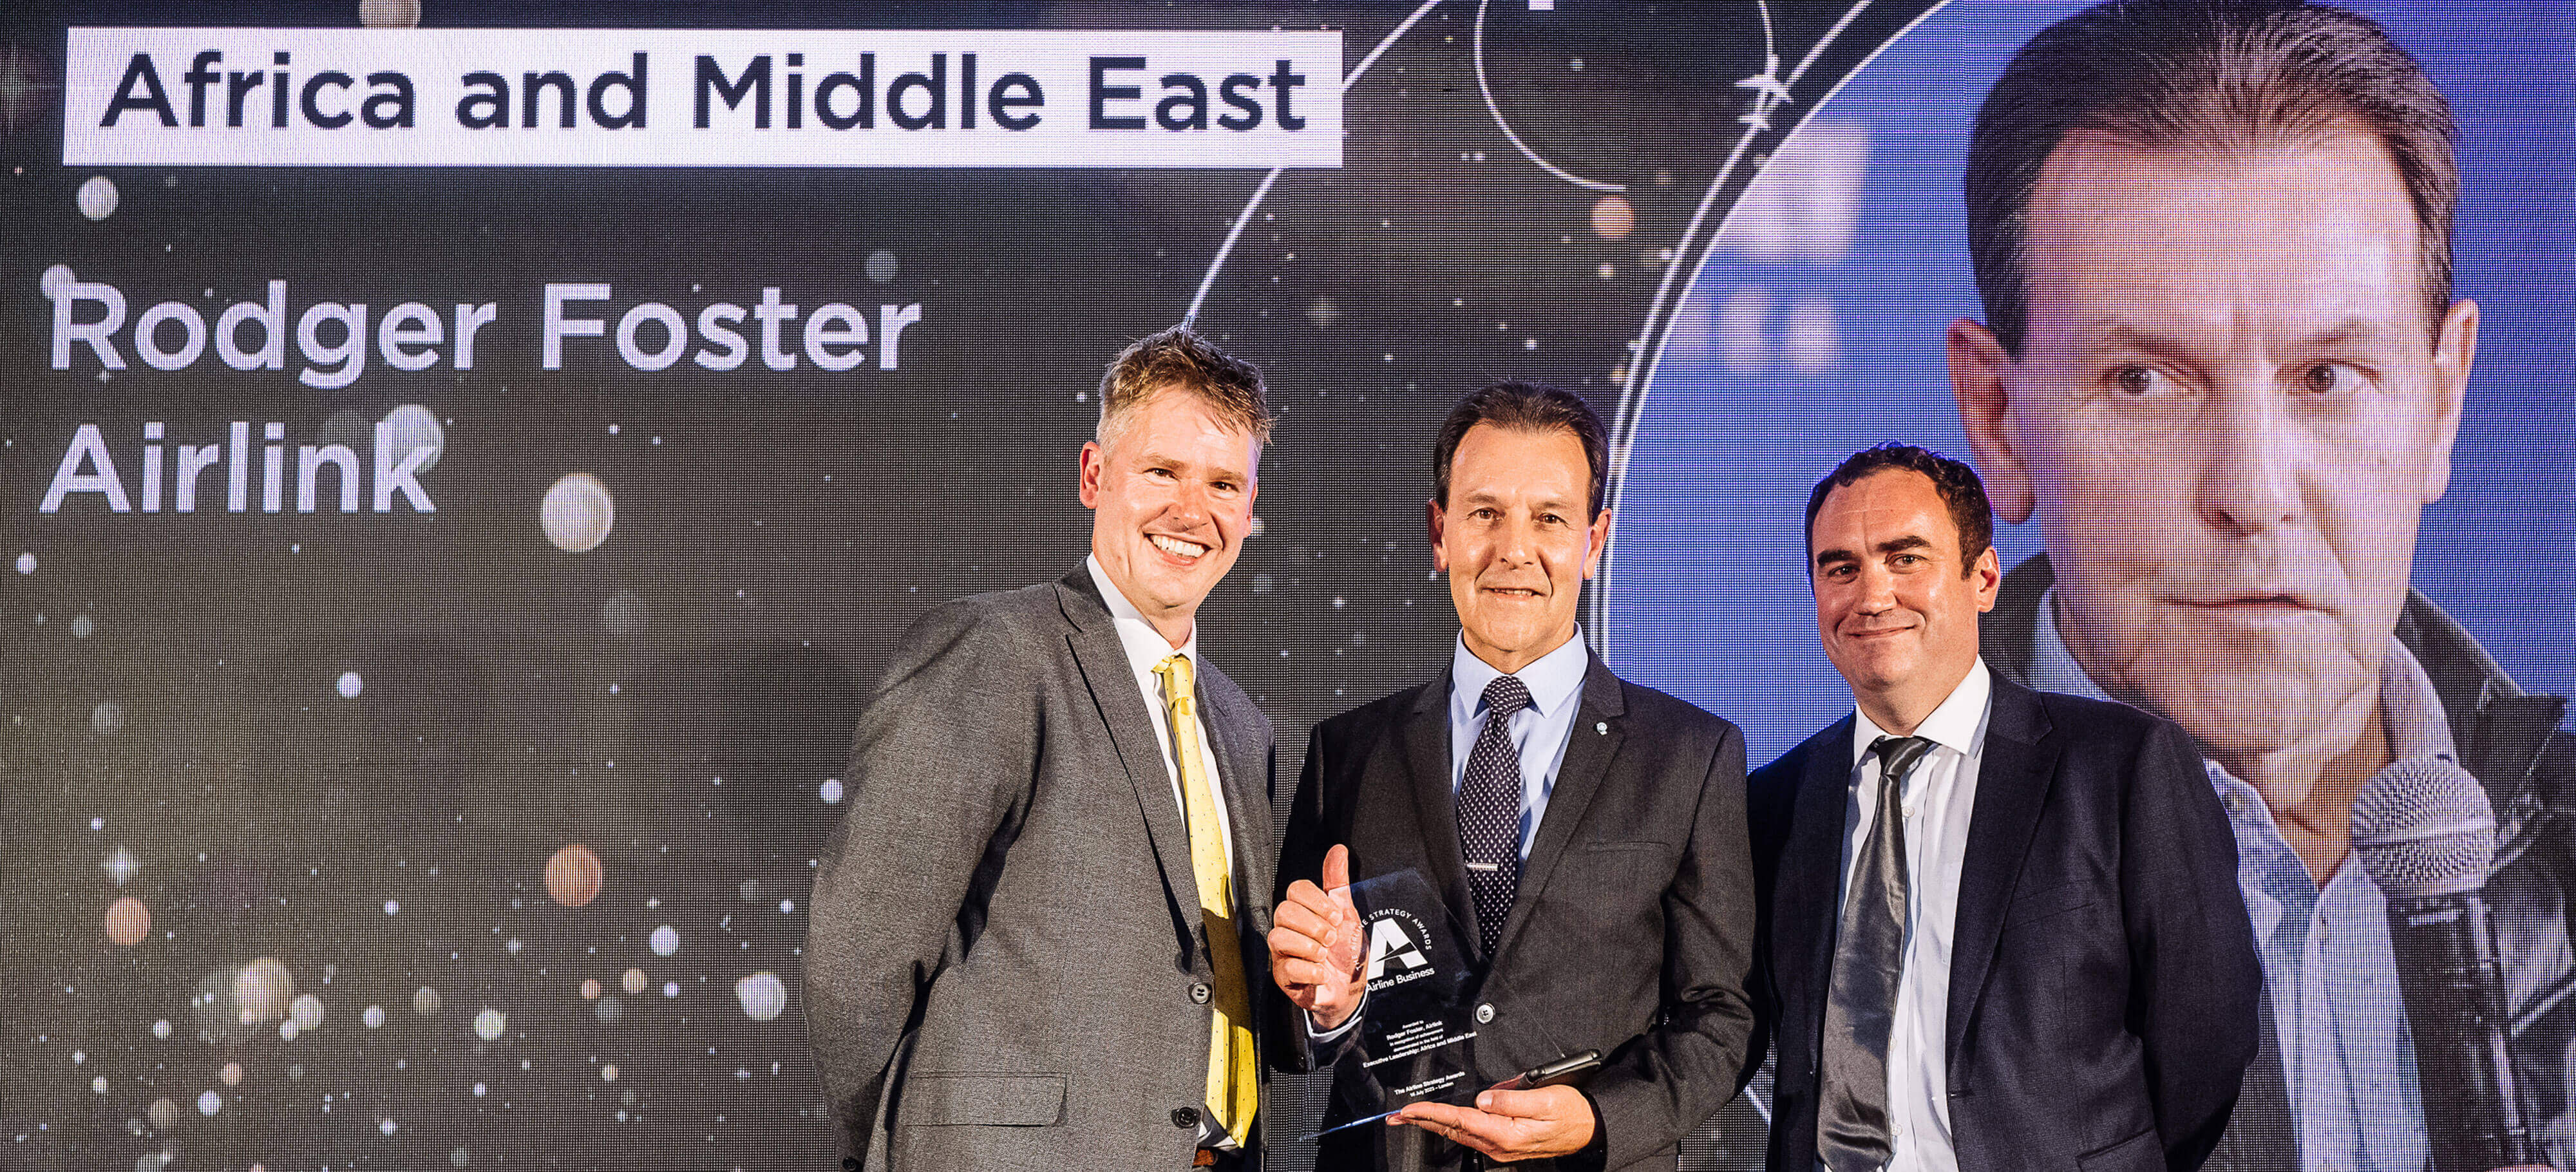 Airlink's prestigious global award